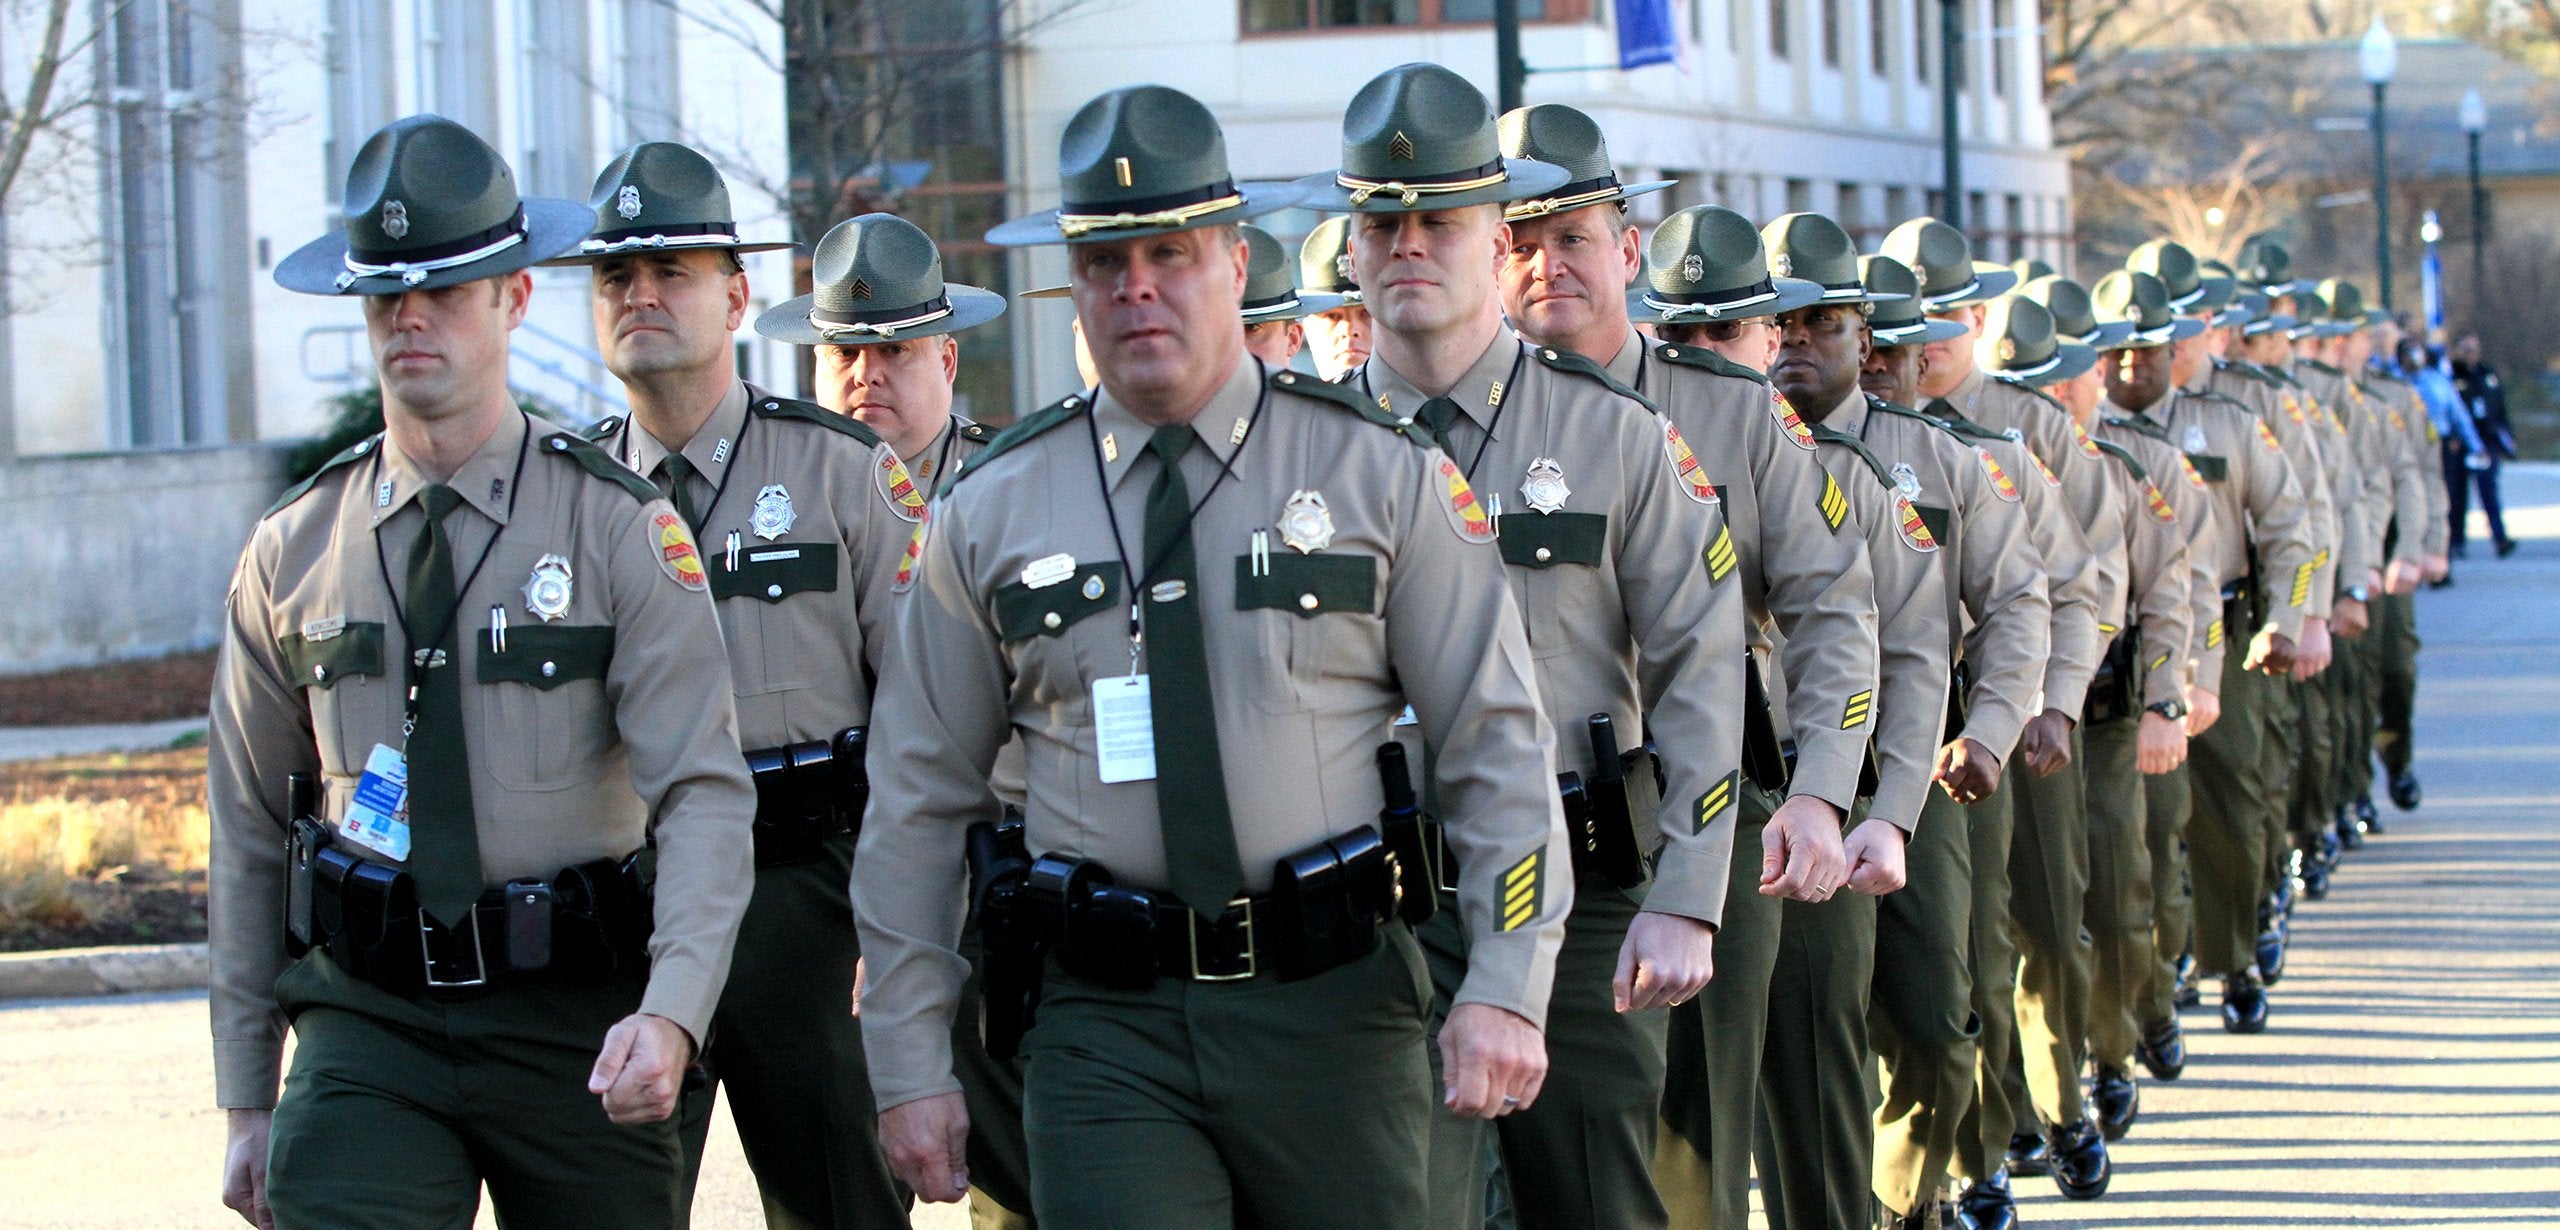 State trooper campaign hat turns 50 - Claiborne Progress | Claiborne ...